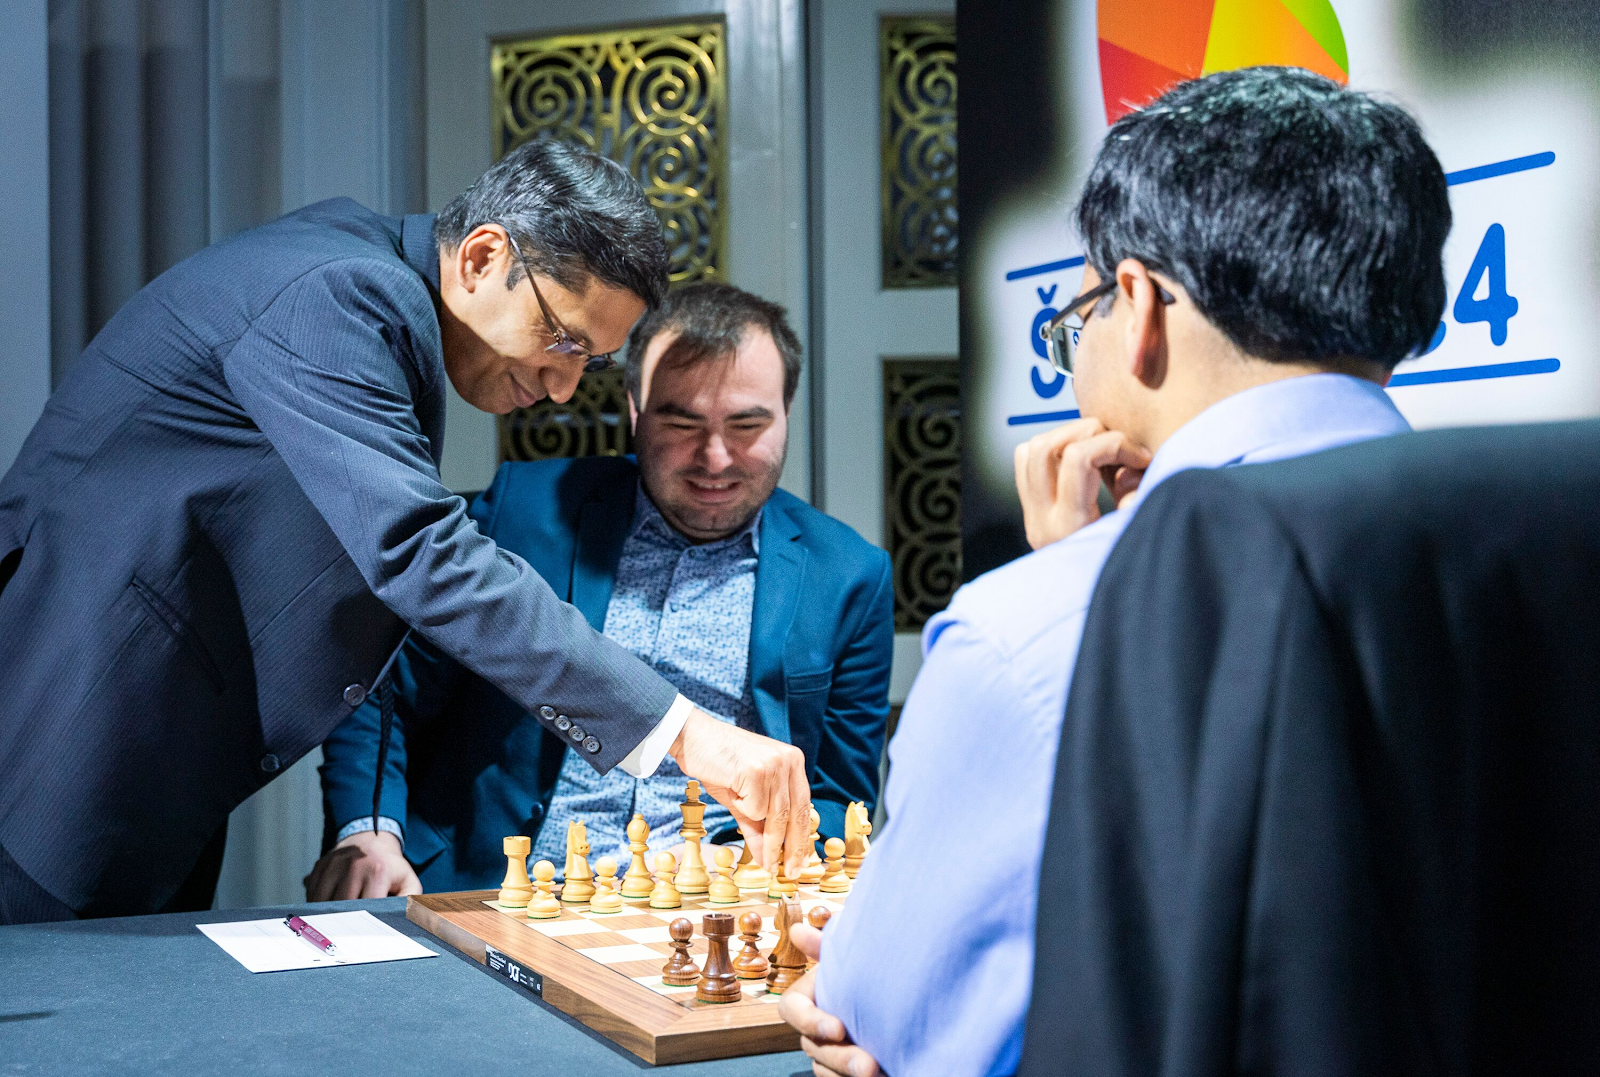 Game 9, Carlsen - Nepomniachtchi World Chess Championship Recap